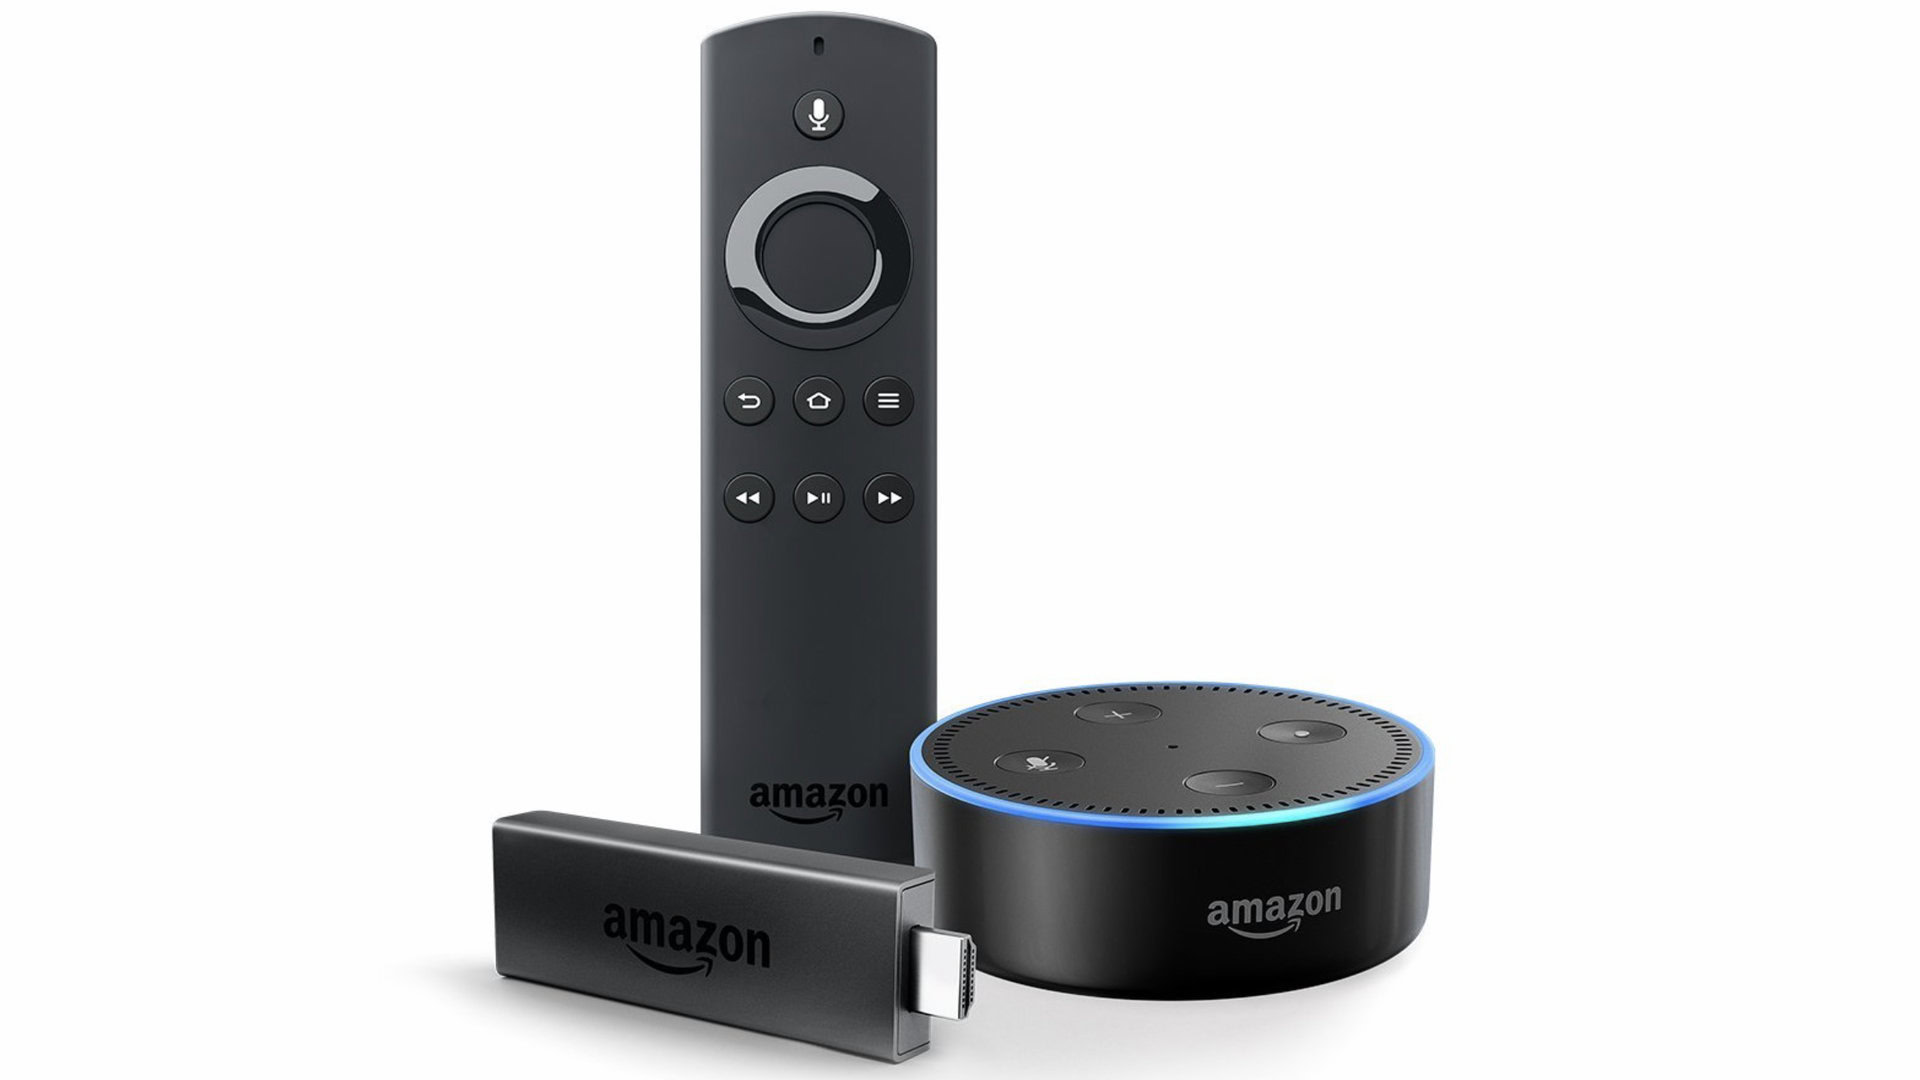 Amazon Fire TV Stick and Echo Dot.